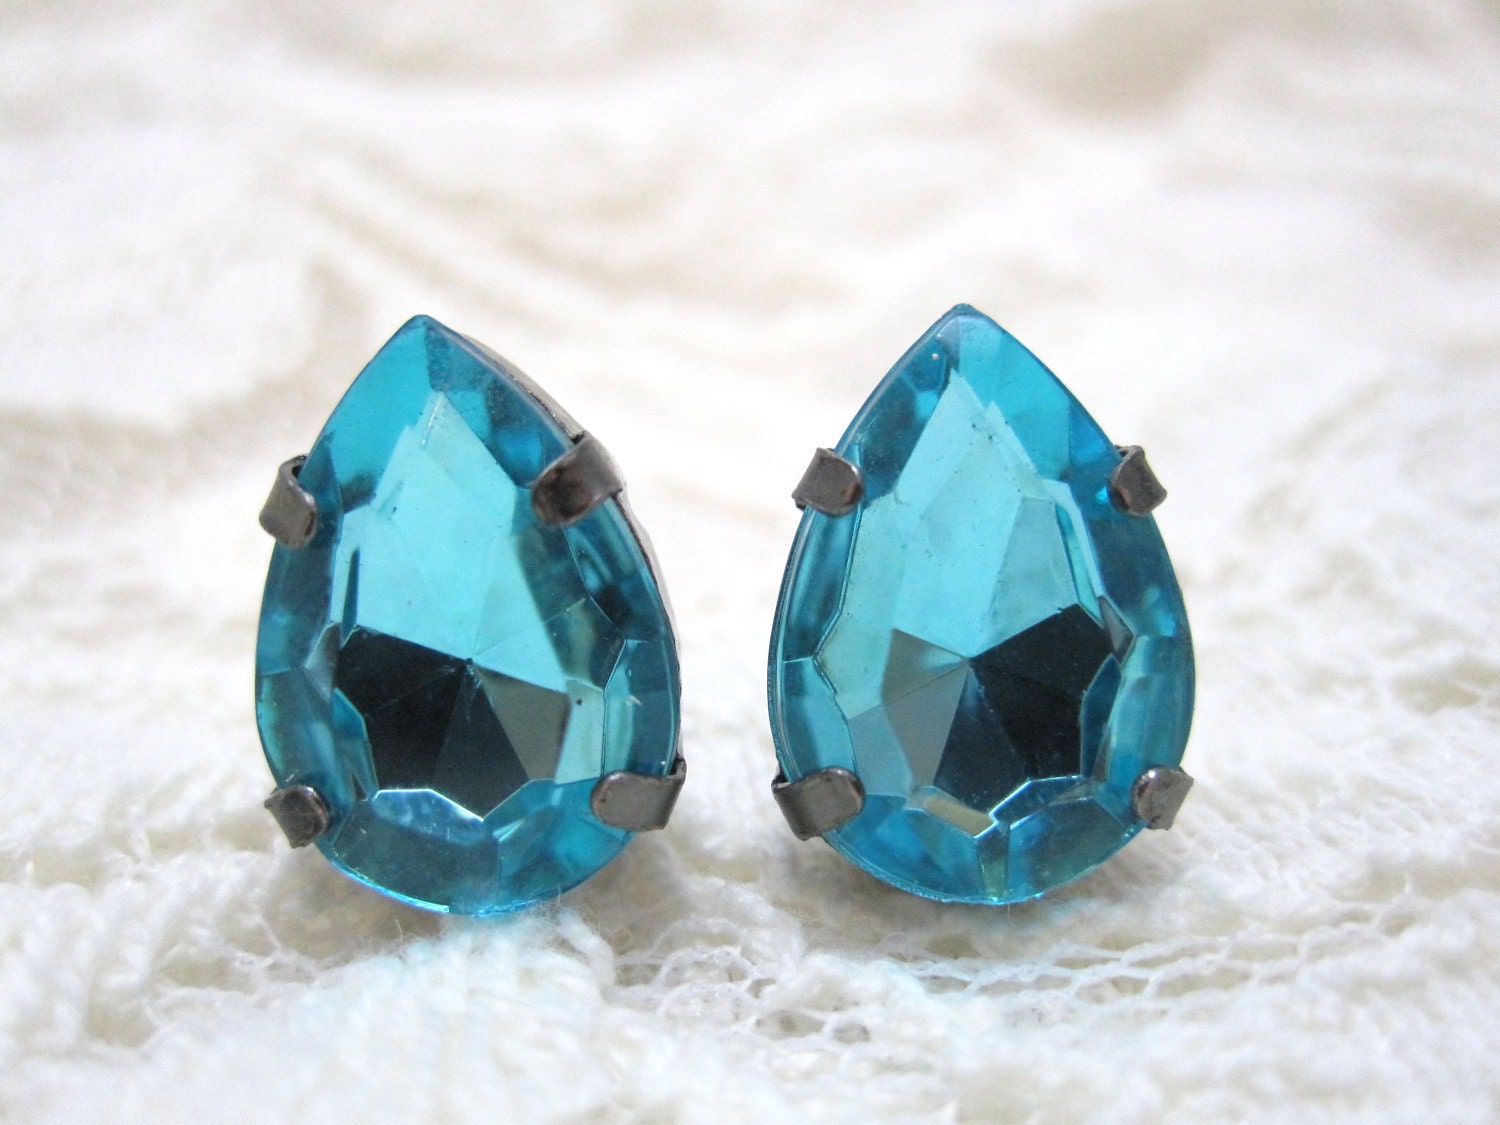 Aqua stud earrings - blue pear crystals on titanium posts - nickel free for sensitive ears - LazyOwlBoutique